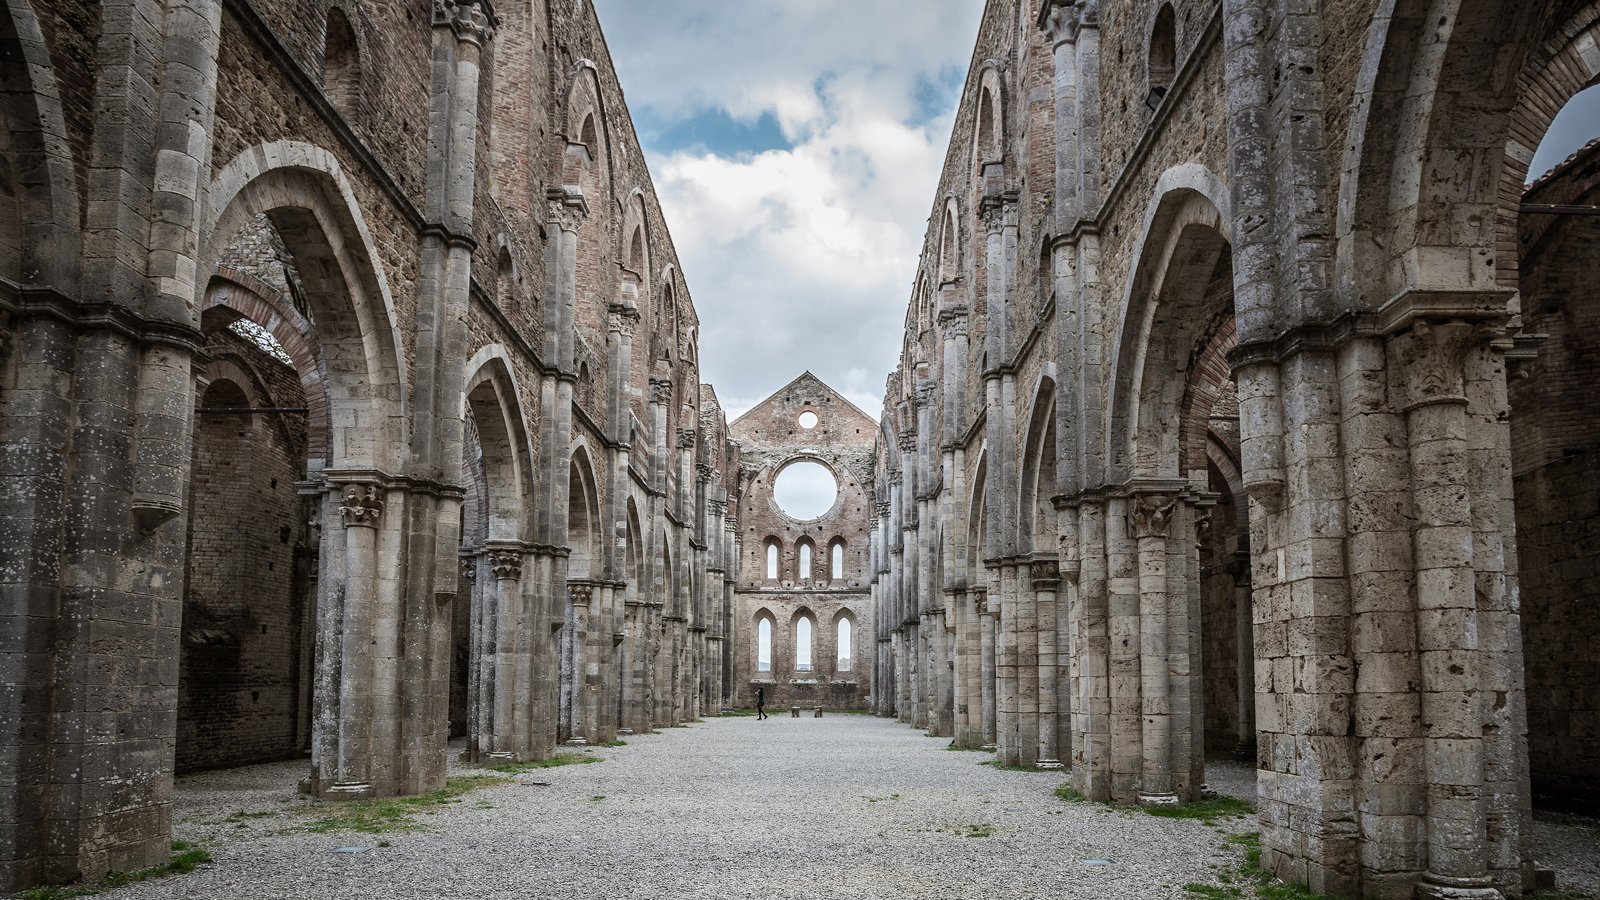 The Abbey of San Galgano, testament to the power of the Cistercians &amp; the Via Francigena